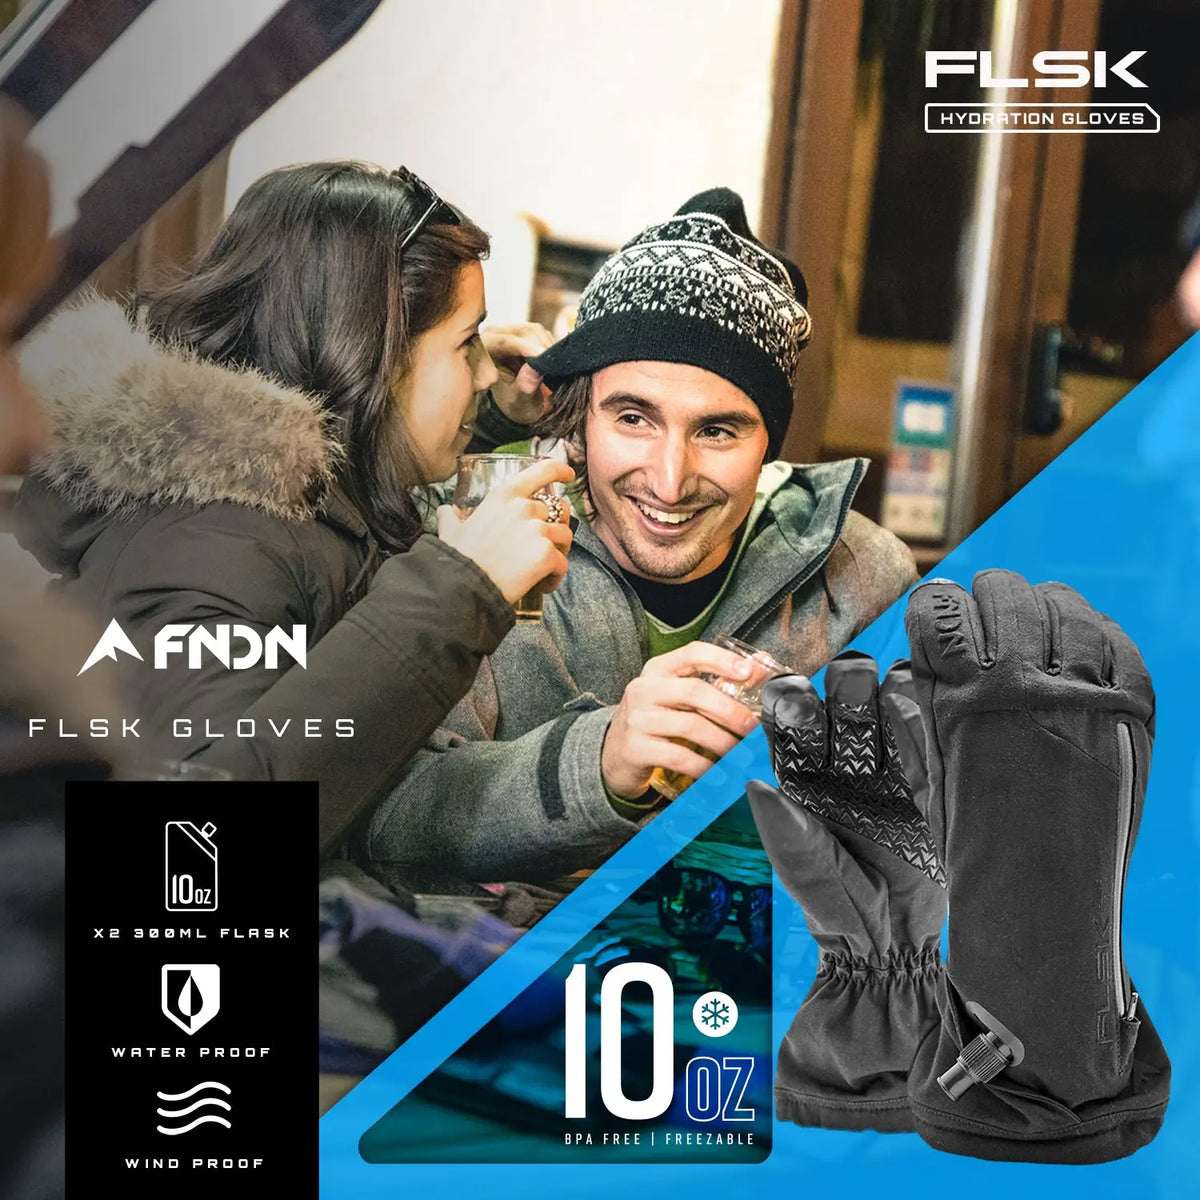 FNDN FLSK Glove - The FLASK GLOVE FNDN